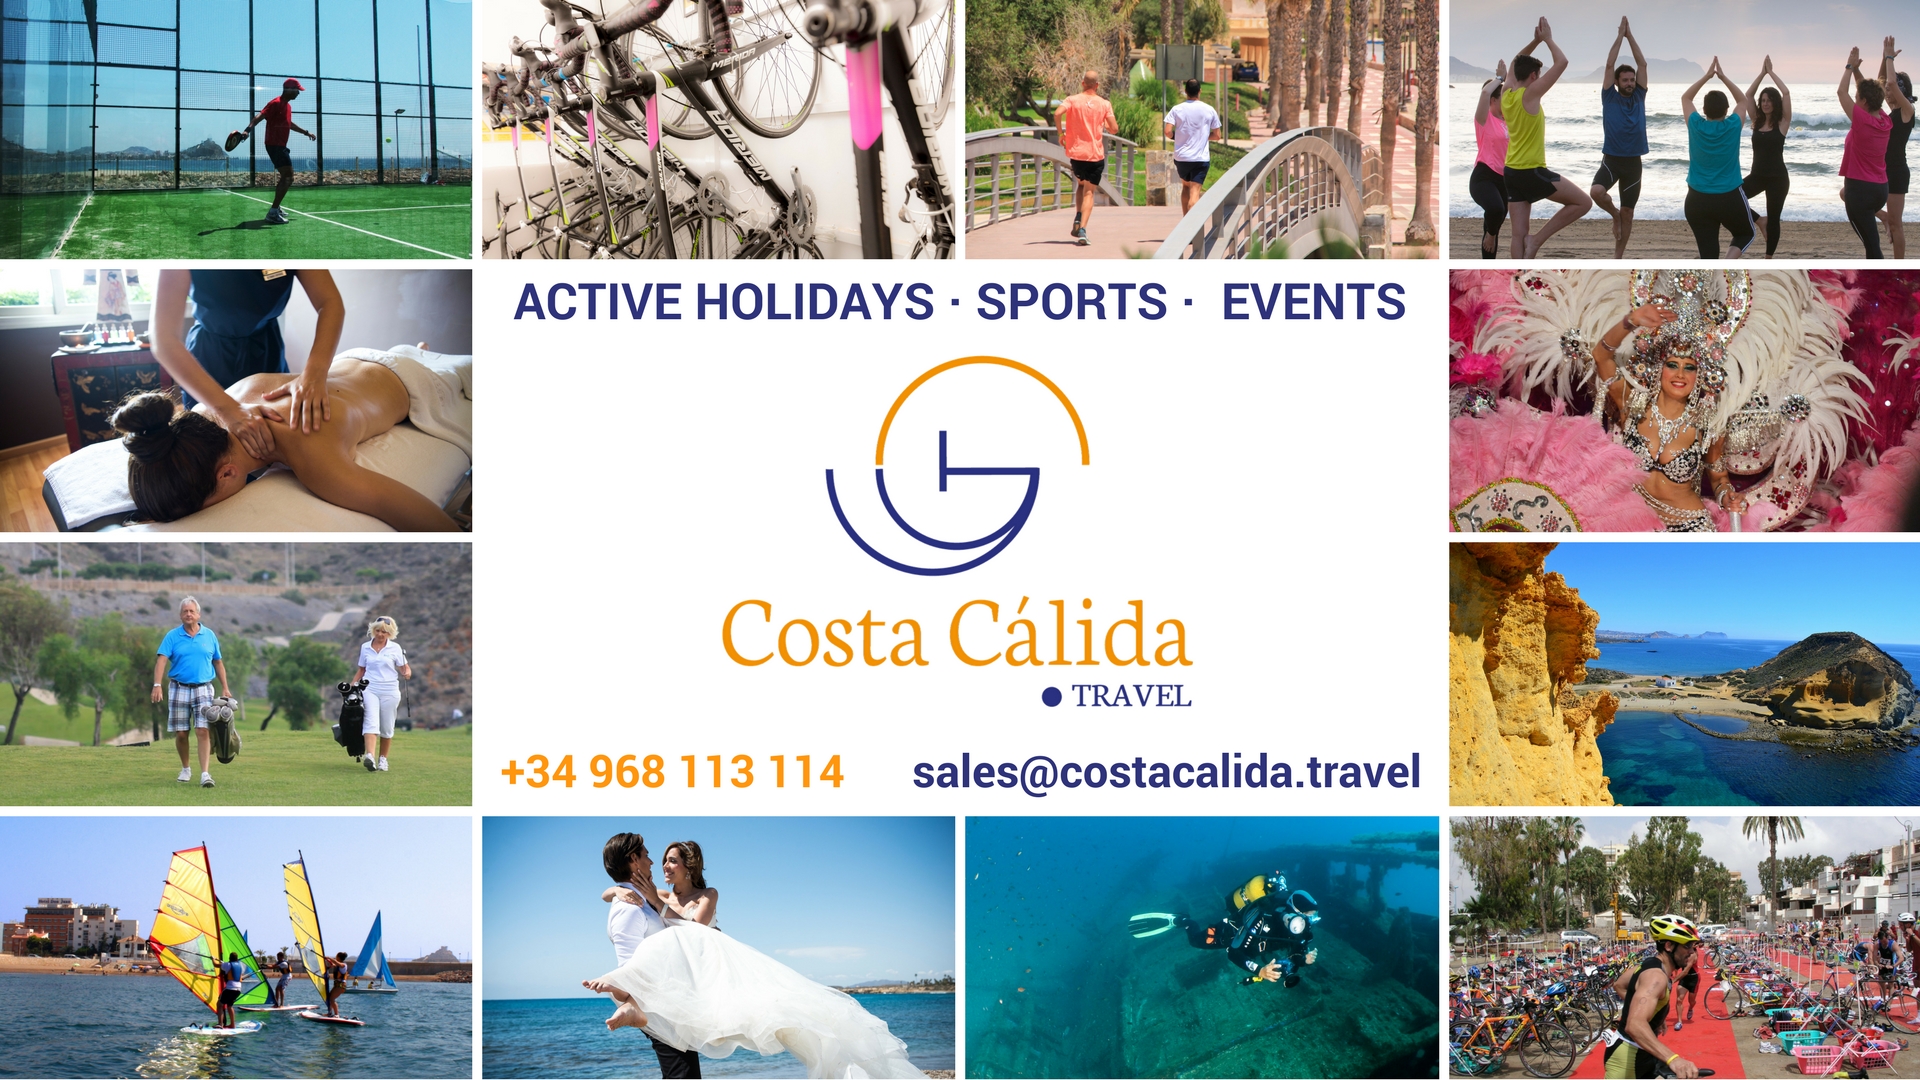 COSTA CÁLIDA .TRAVEL ACTIVE HOLIDAYS - SPORTS - EVENTS